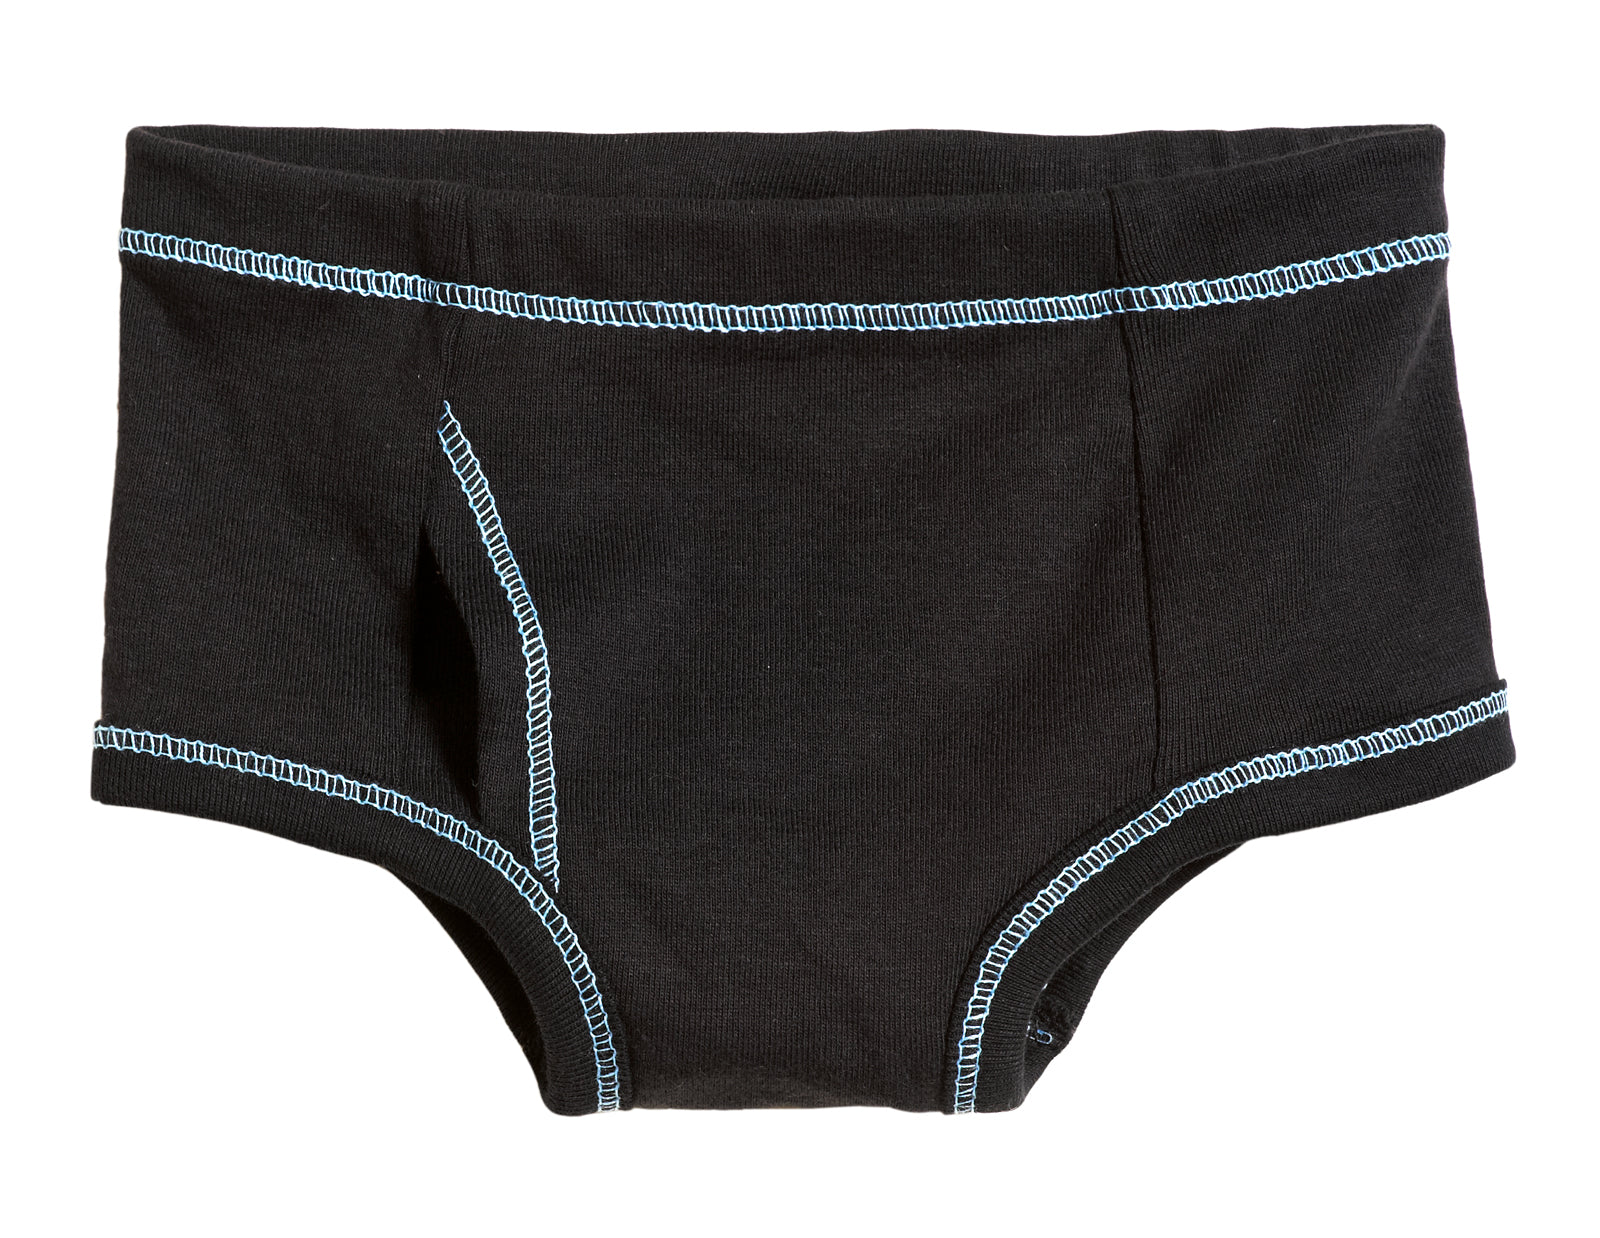 Boys Cotton Briefs Toddler Boys Soft Underwear Kids Panties for Boys 1-12T